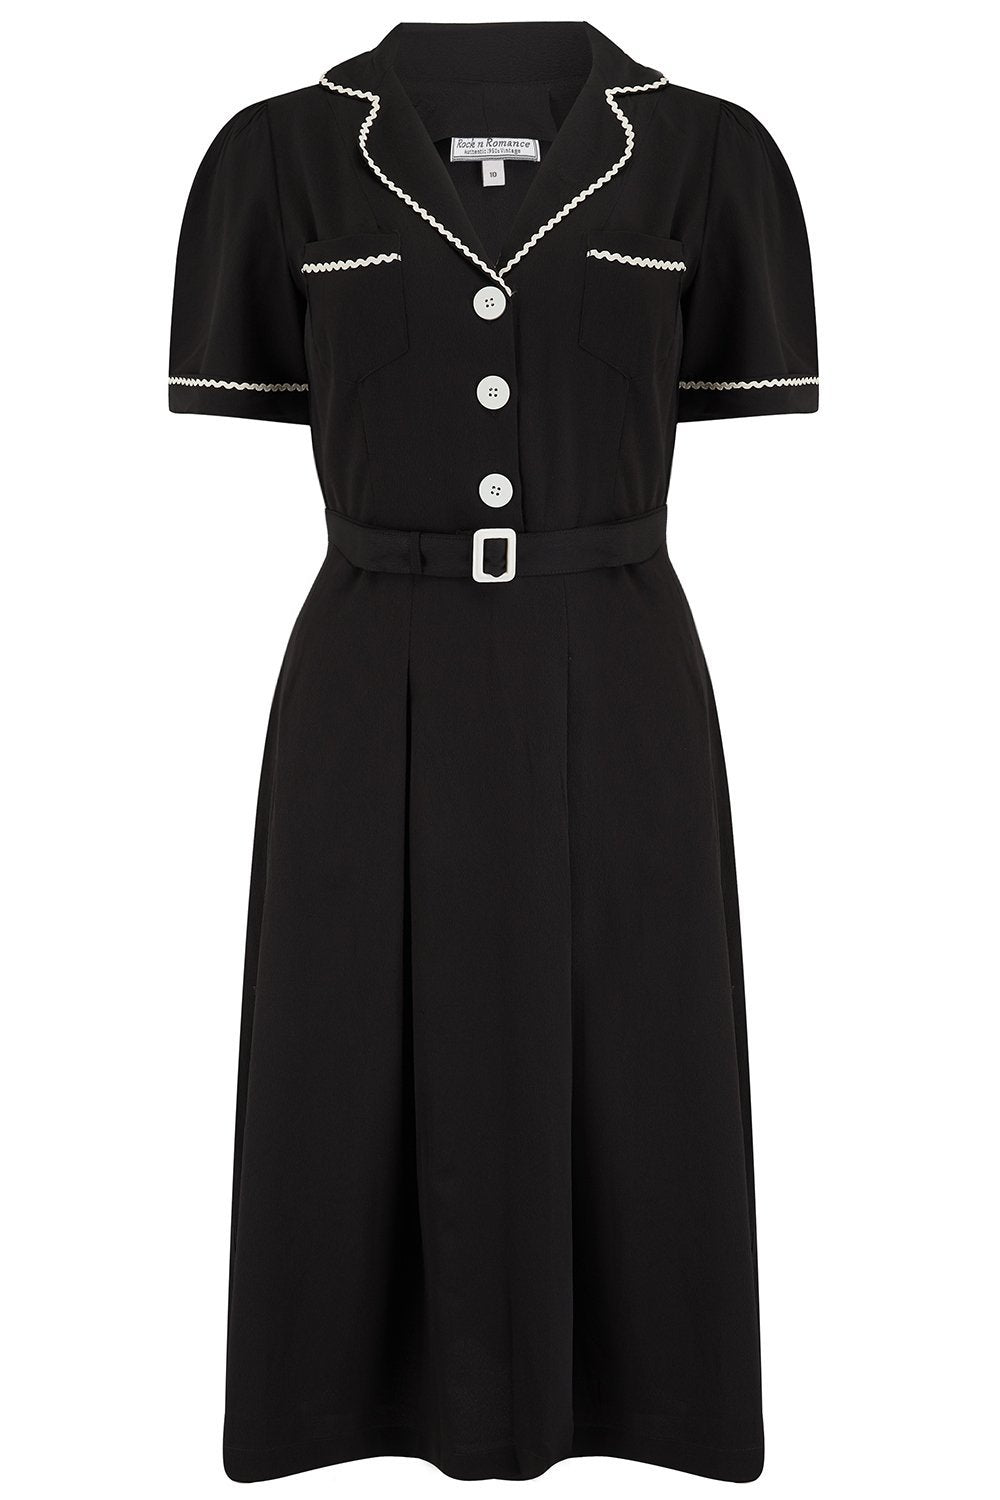 Rock n Romance “Kitty” Shirtwaist Dress in Black, True Late 40s Early 1950s Vintage Style